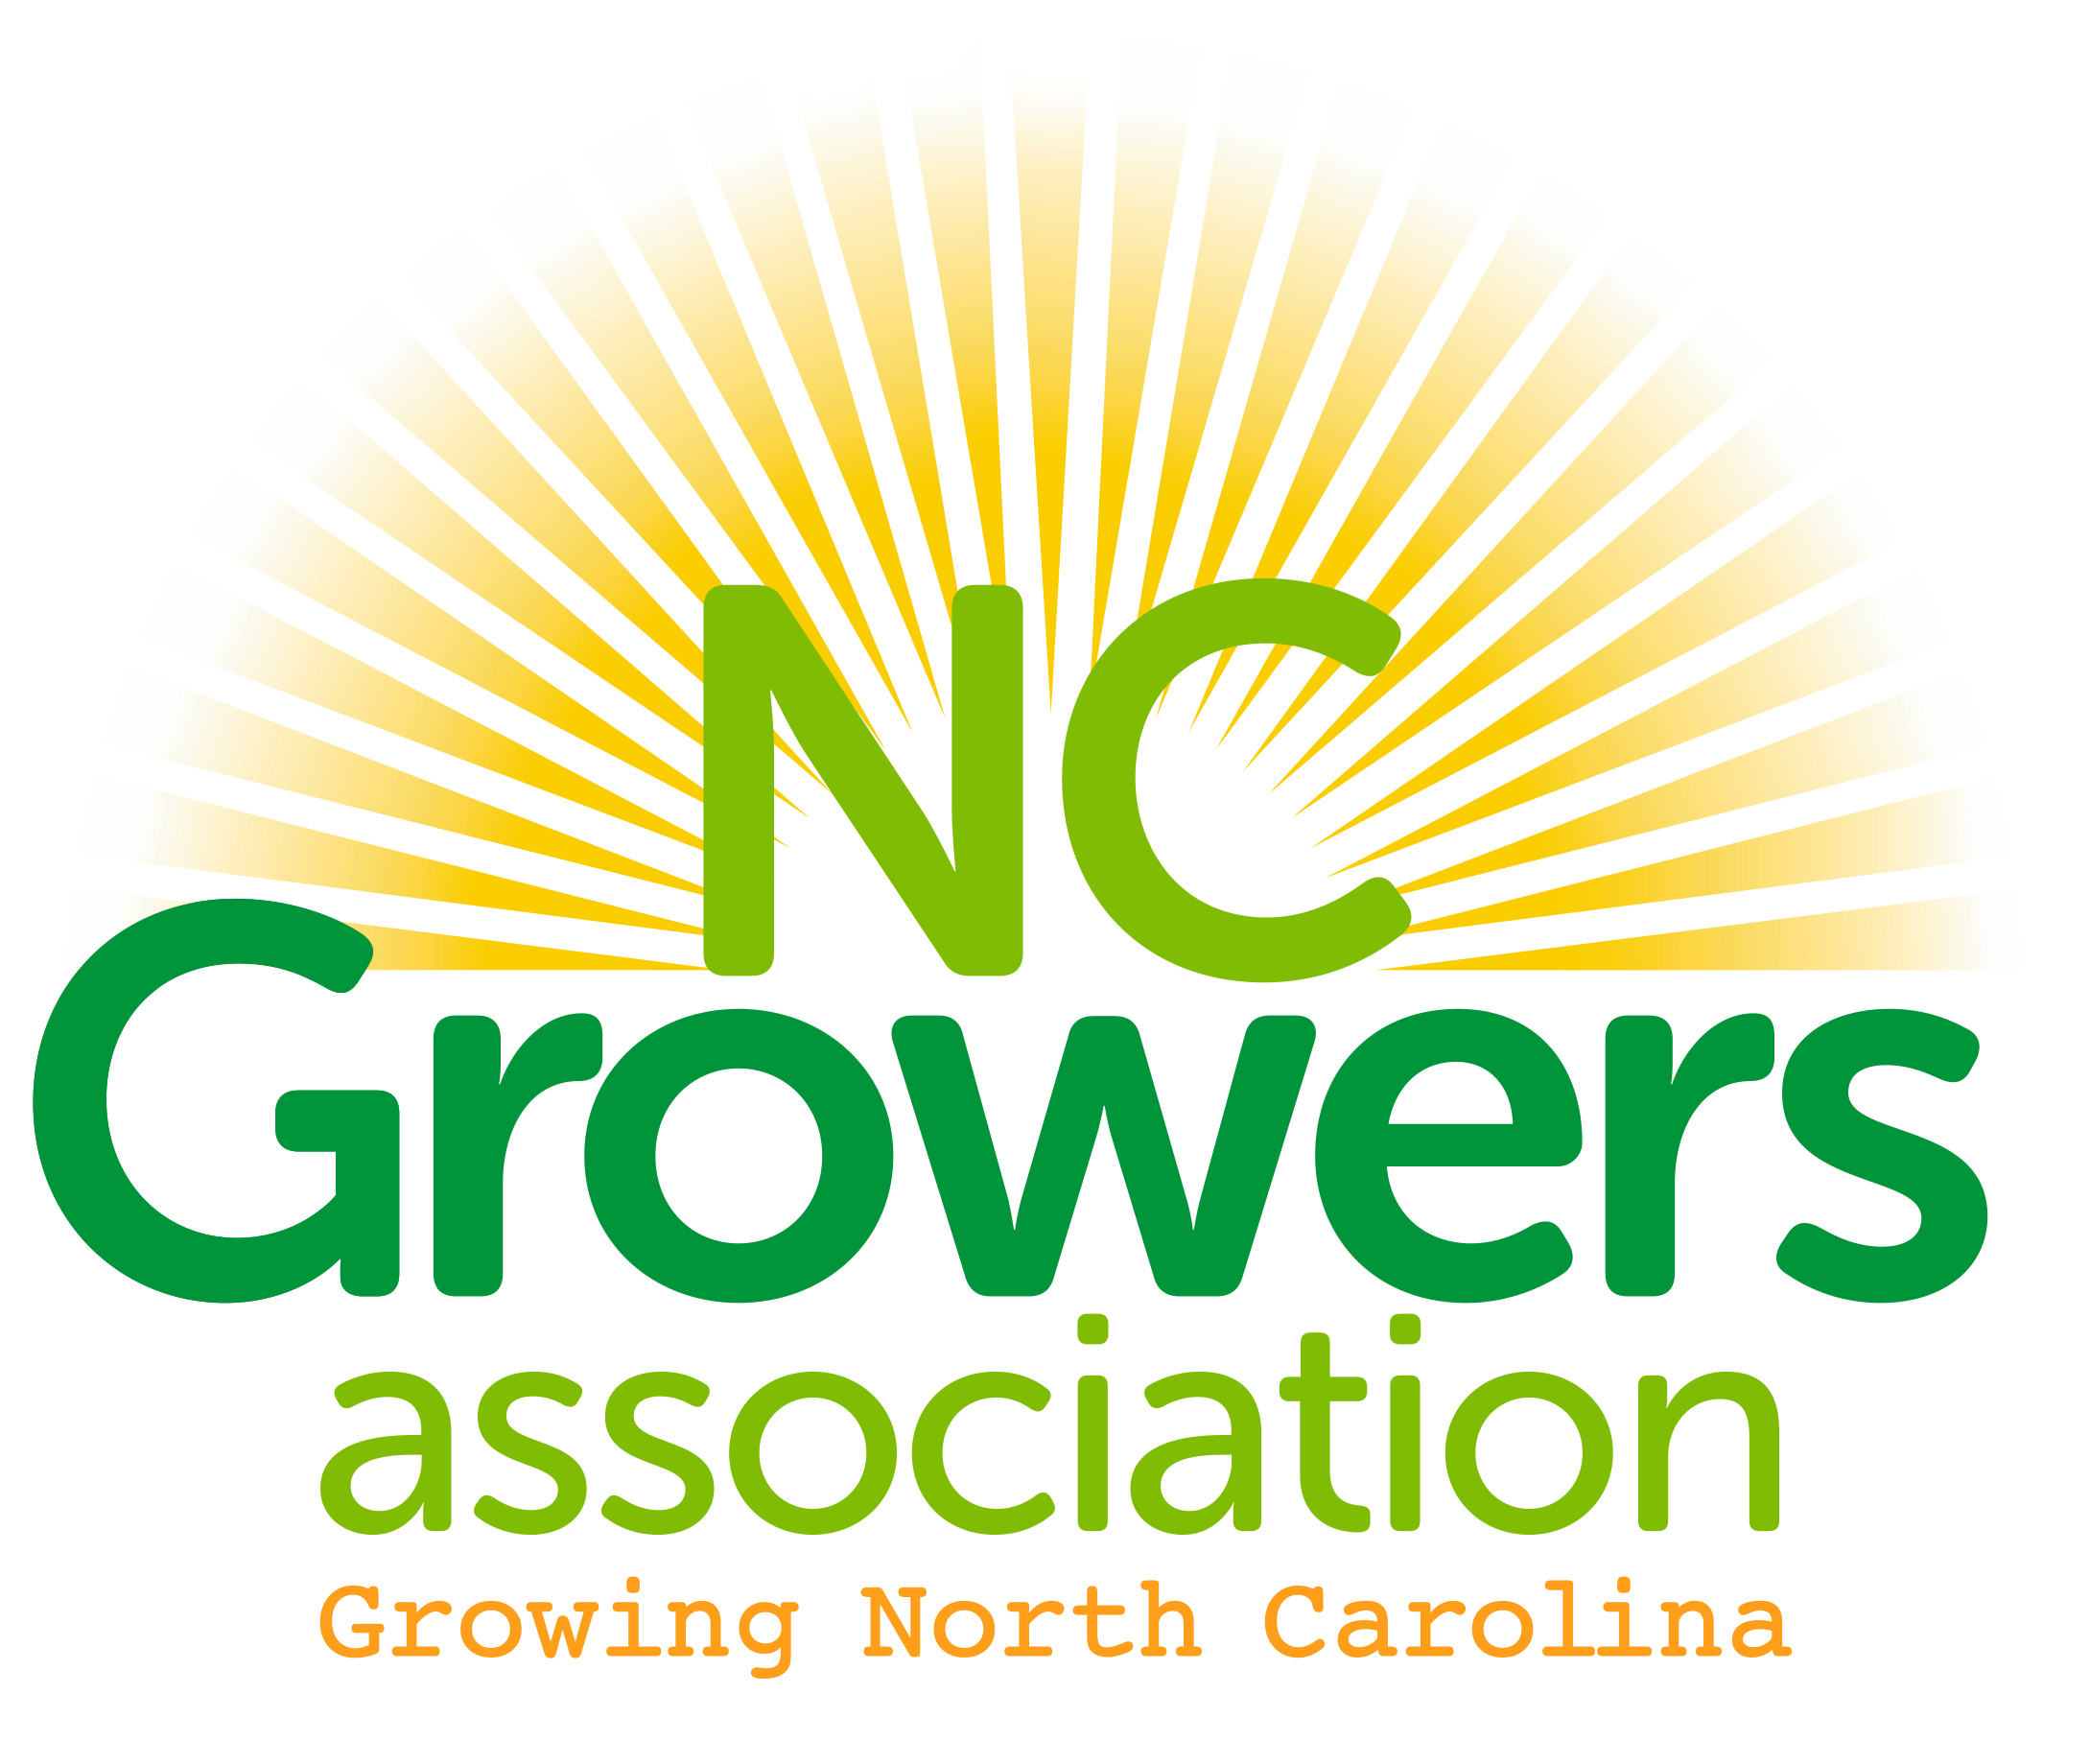 NC Growers Association